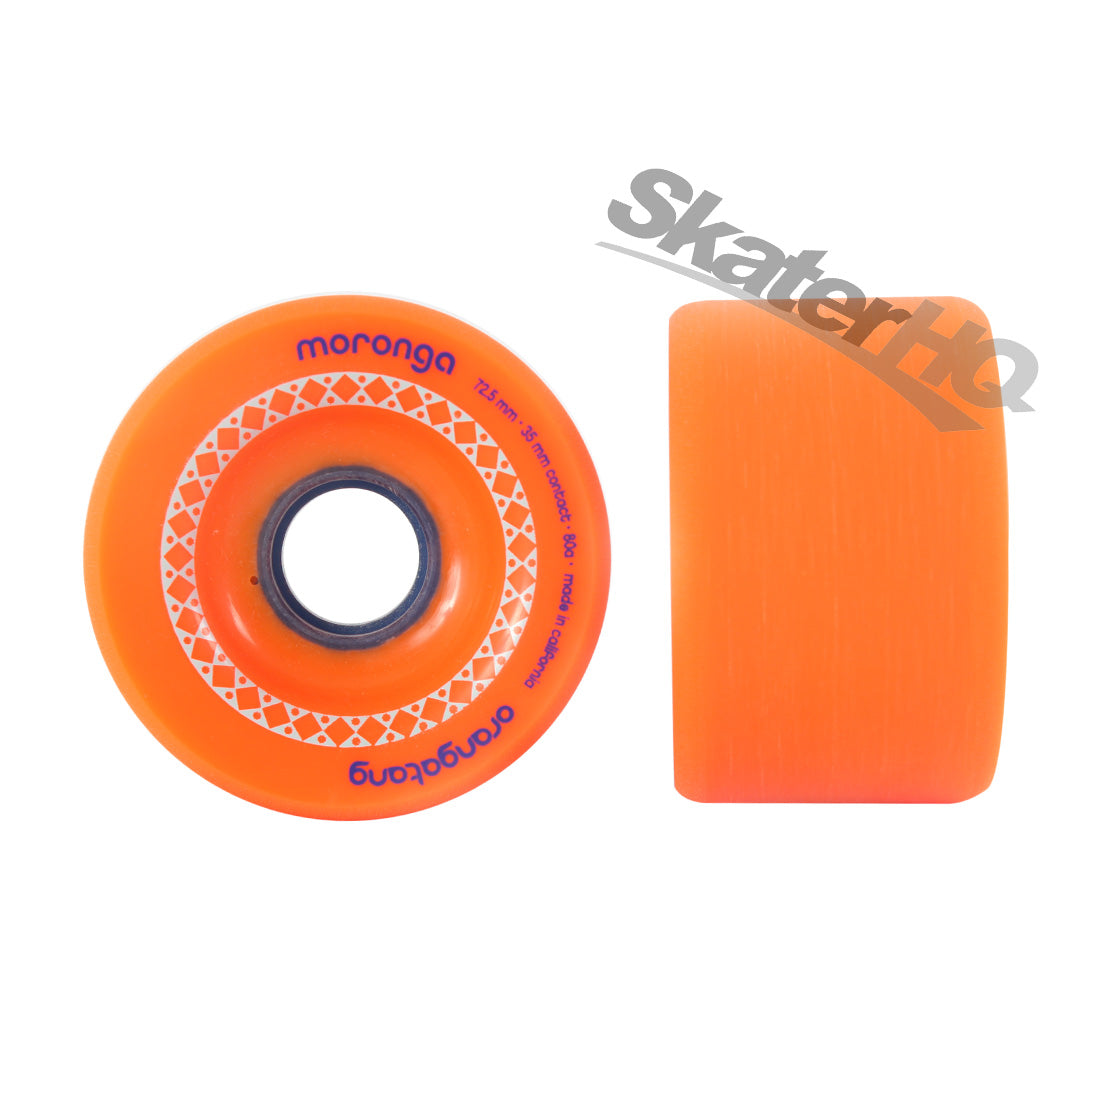 Orangatang Moronga 72.5mm/80a 4pk - Orange Skateboard Wheels